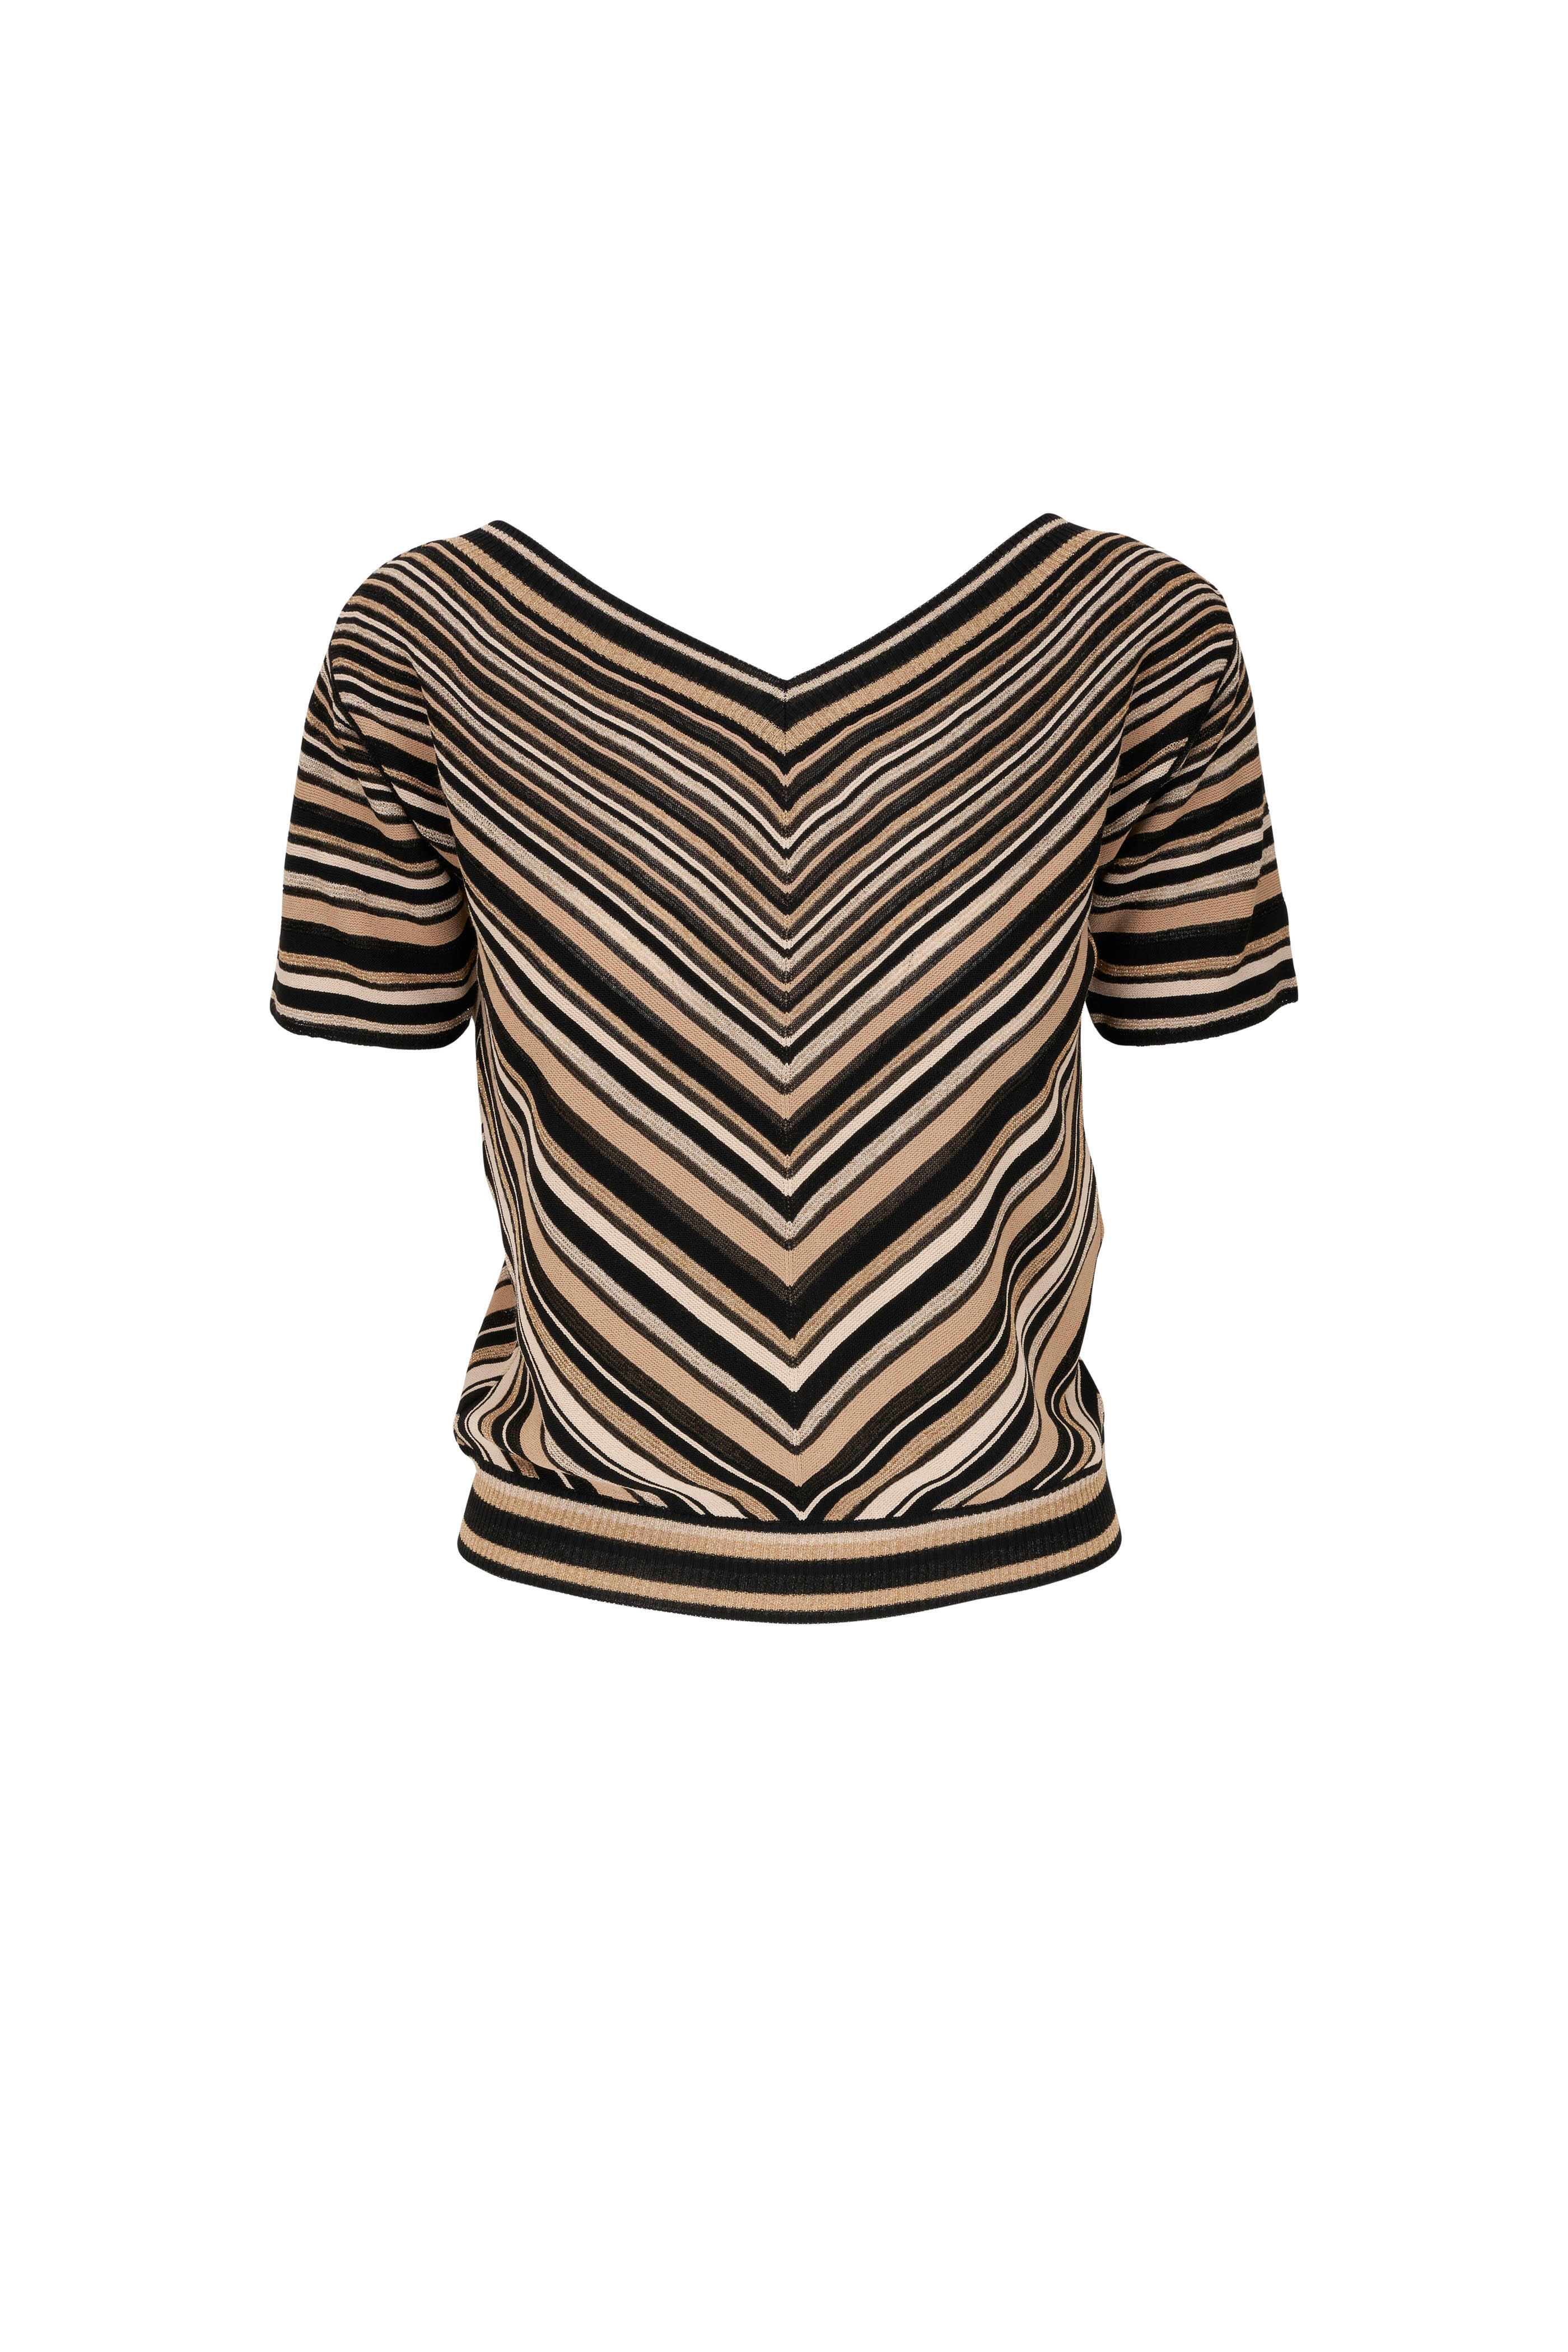 D.Exterior - Black Gold Lurex Short Top Striped Knit & Sleeve